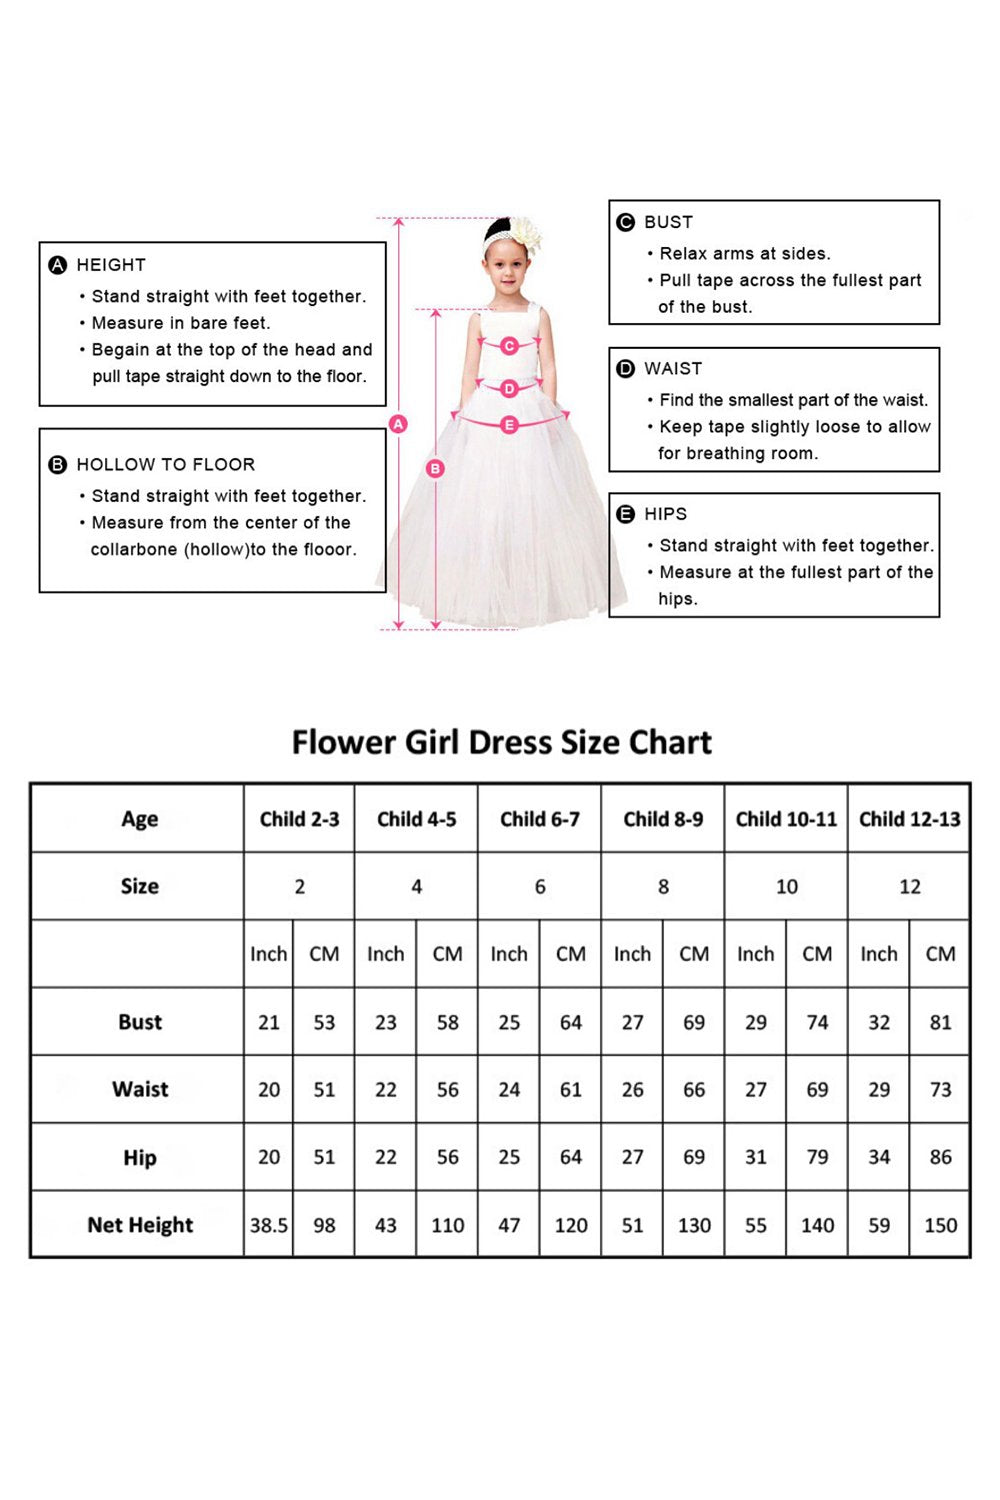 A-Line Knee Length Tulle Lace Flower Girl Dress CF0325